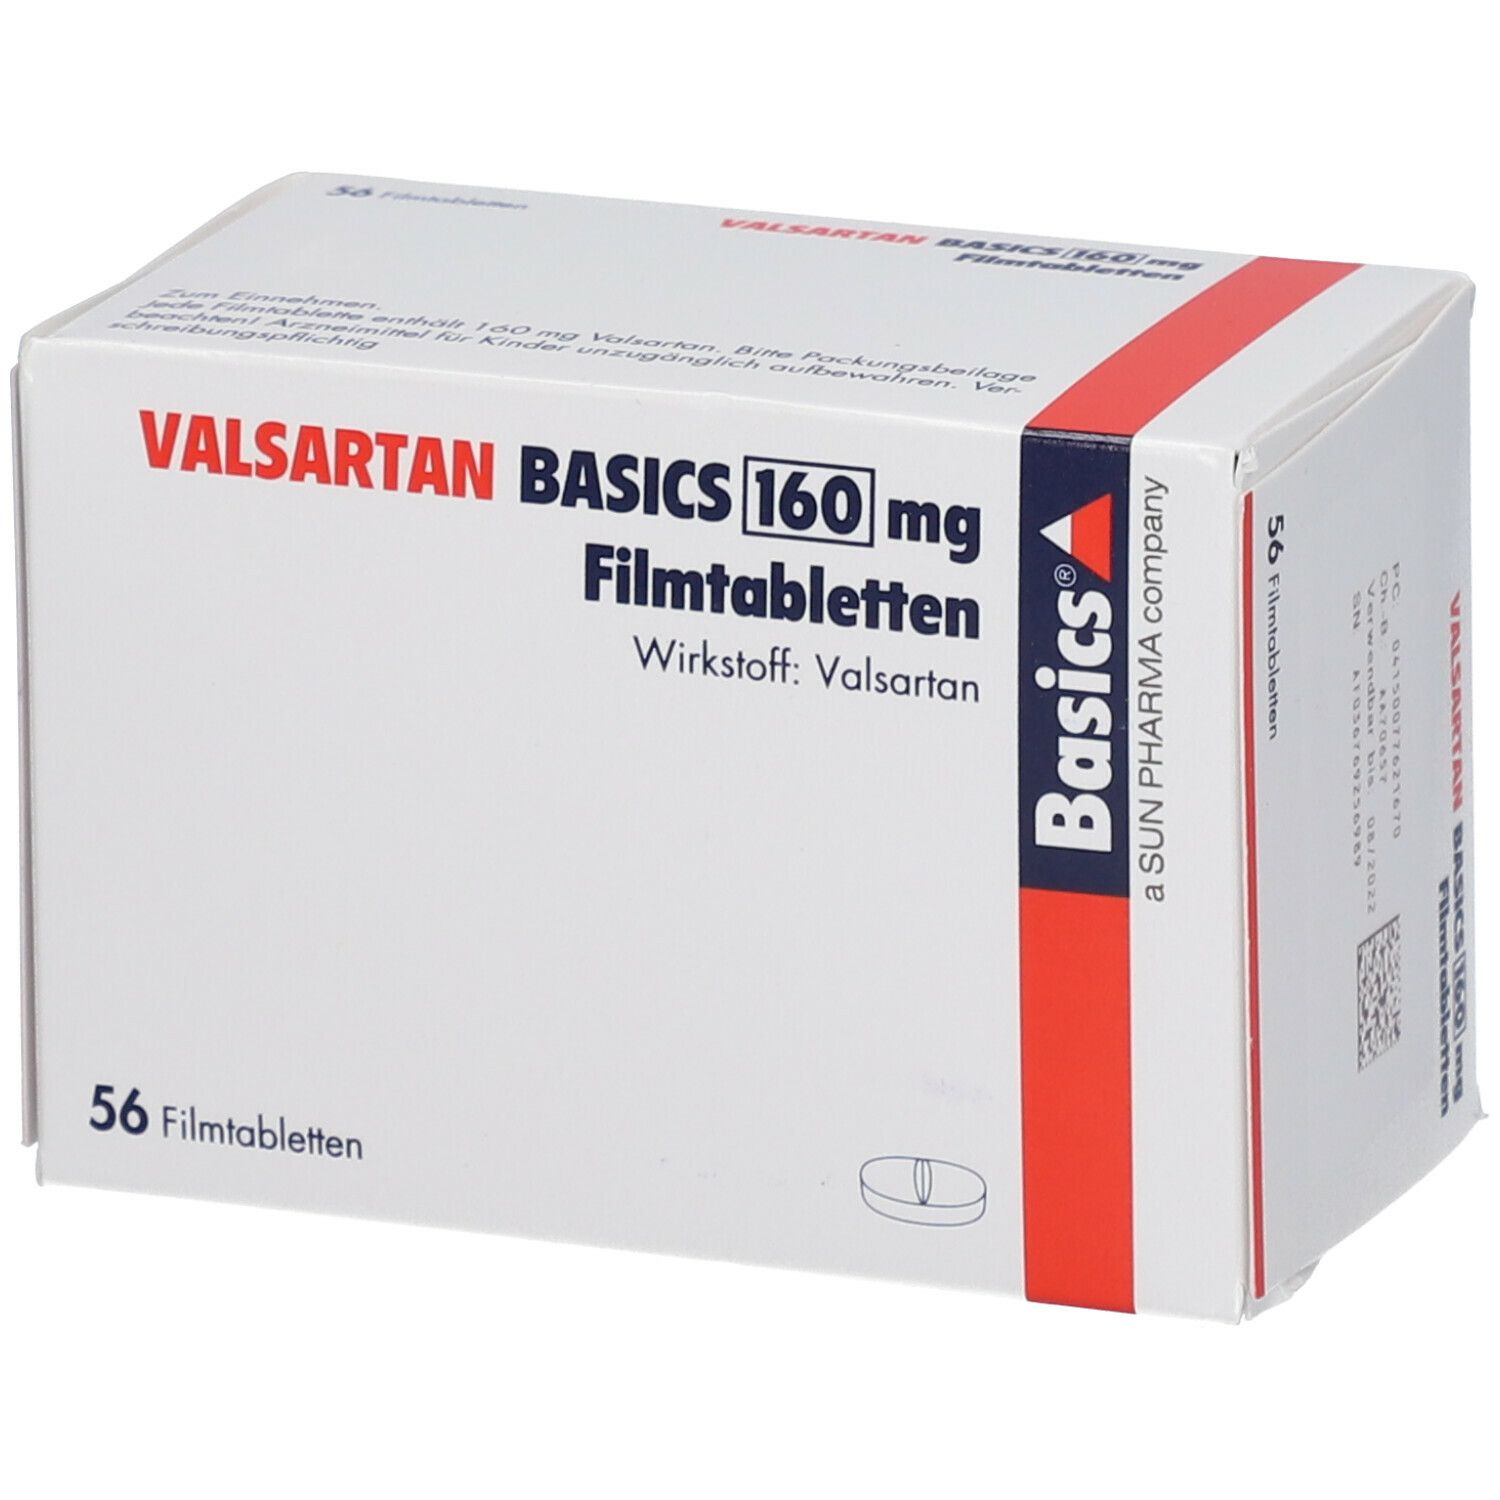 VALSARTAN BASICS 160 mg